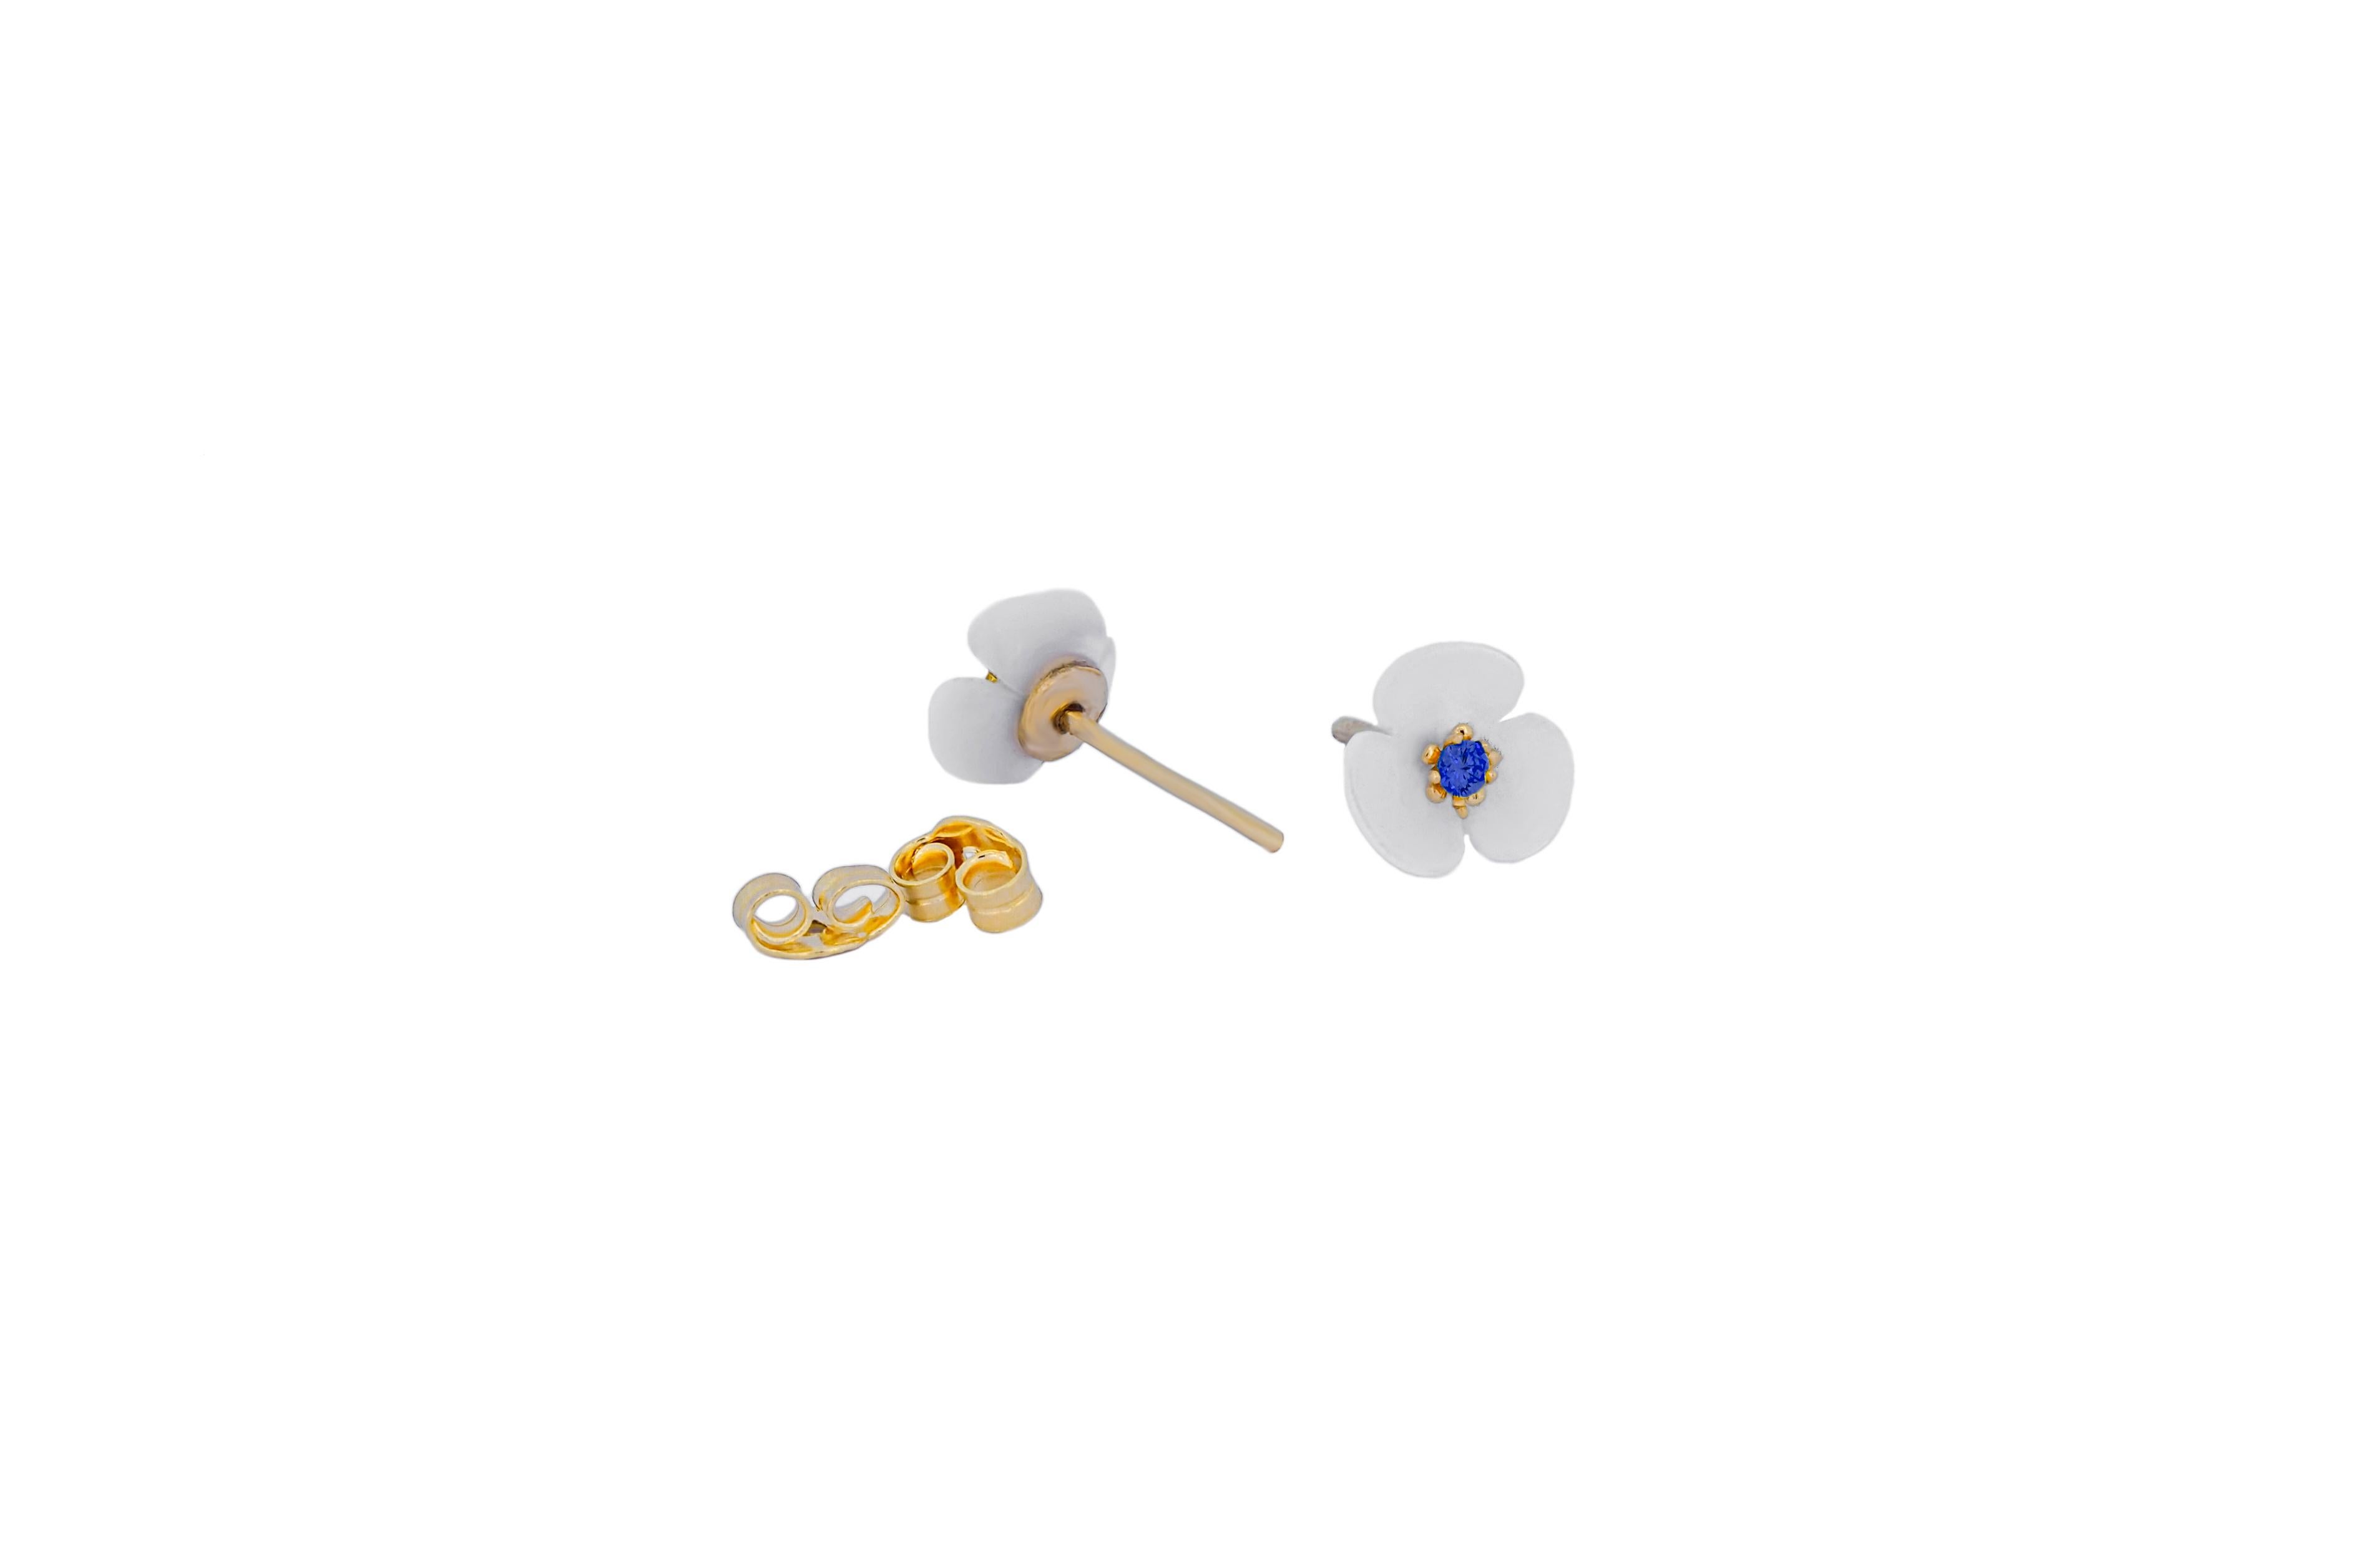 14k gold carved flower earrings studs. 3 petal flower earrings. Blue sapphire 14k gold earrings. Flower gold earrings. White flower wedding earrings.

Metal: 14k gold 
Weight: 1.2 gr.
Earrings face: 8 mm.

Gemstones:

2 blue lab sapphires, 2.5 mm